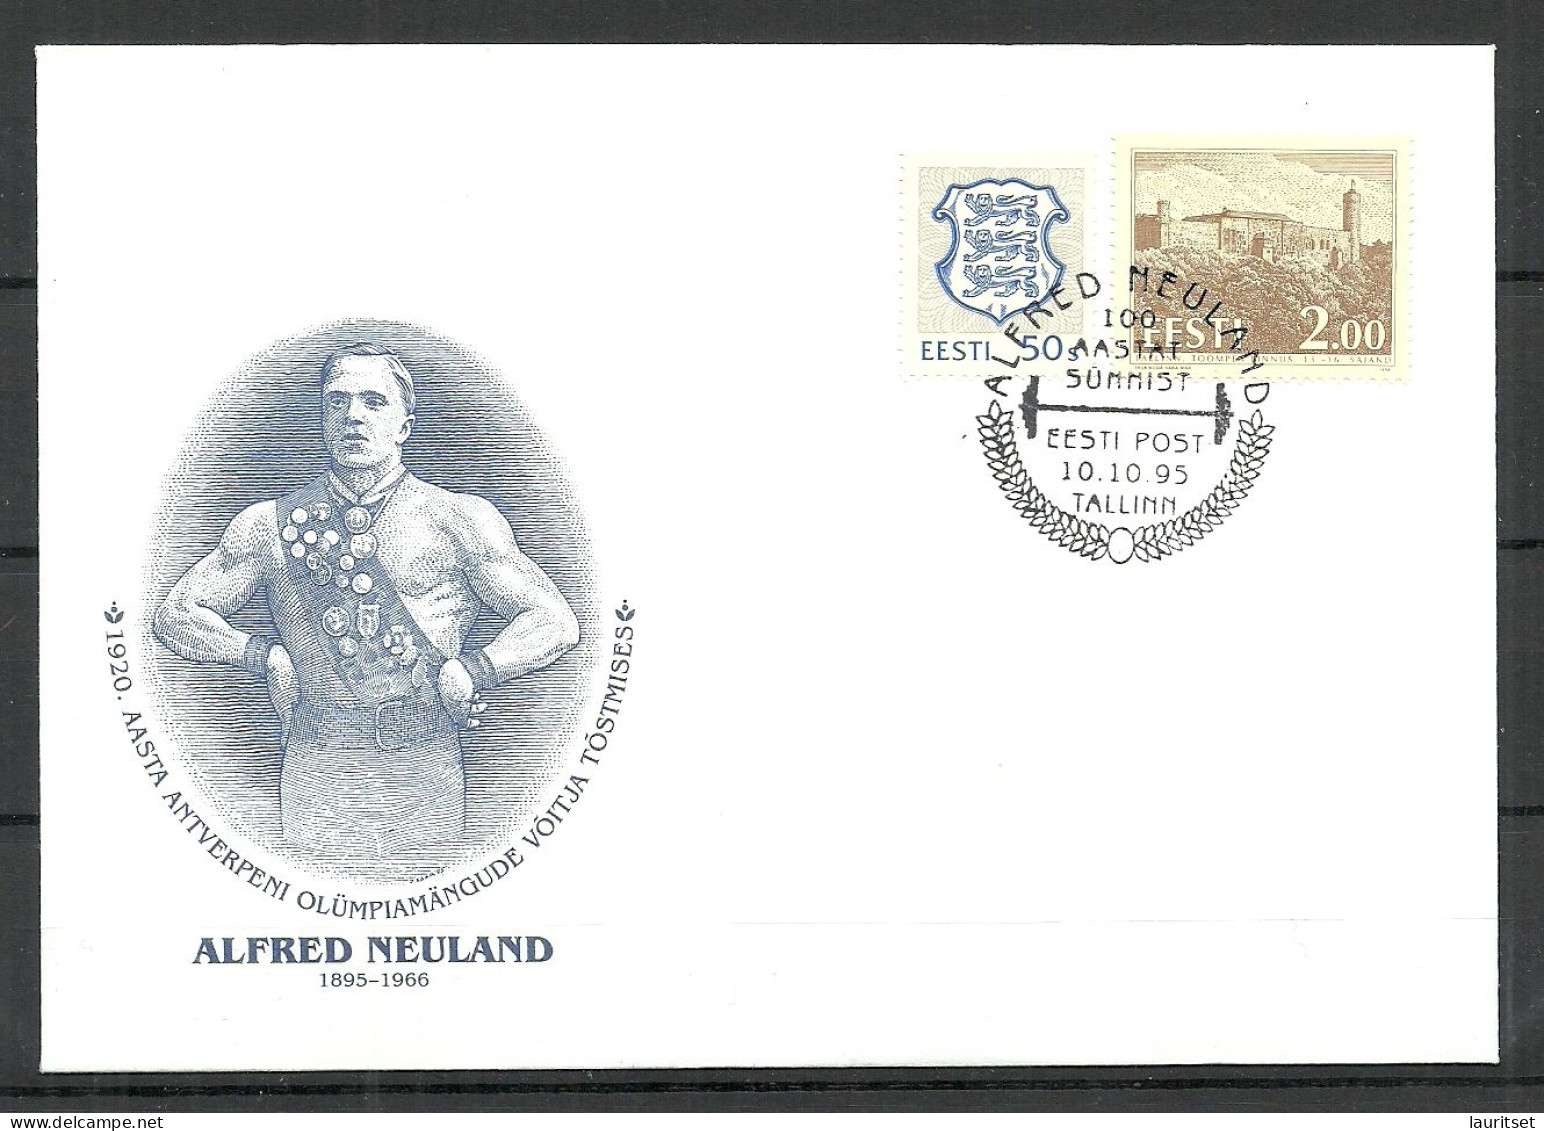 Estland Estonie Estonia 1996 Alfred Neuland Antwerpen Olympic Games Gewichtheben Goldmedal Special Cancel Sonderstempel - Estate 1920: Anversa